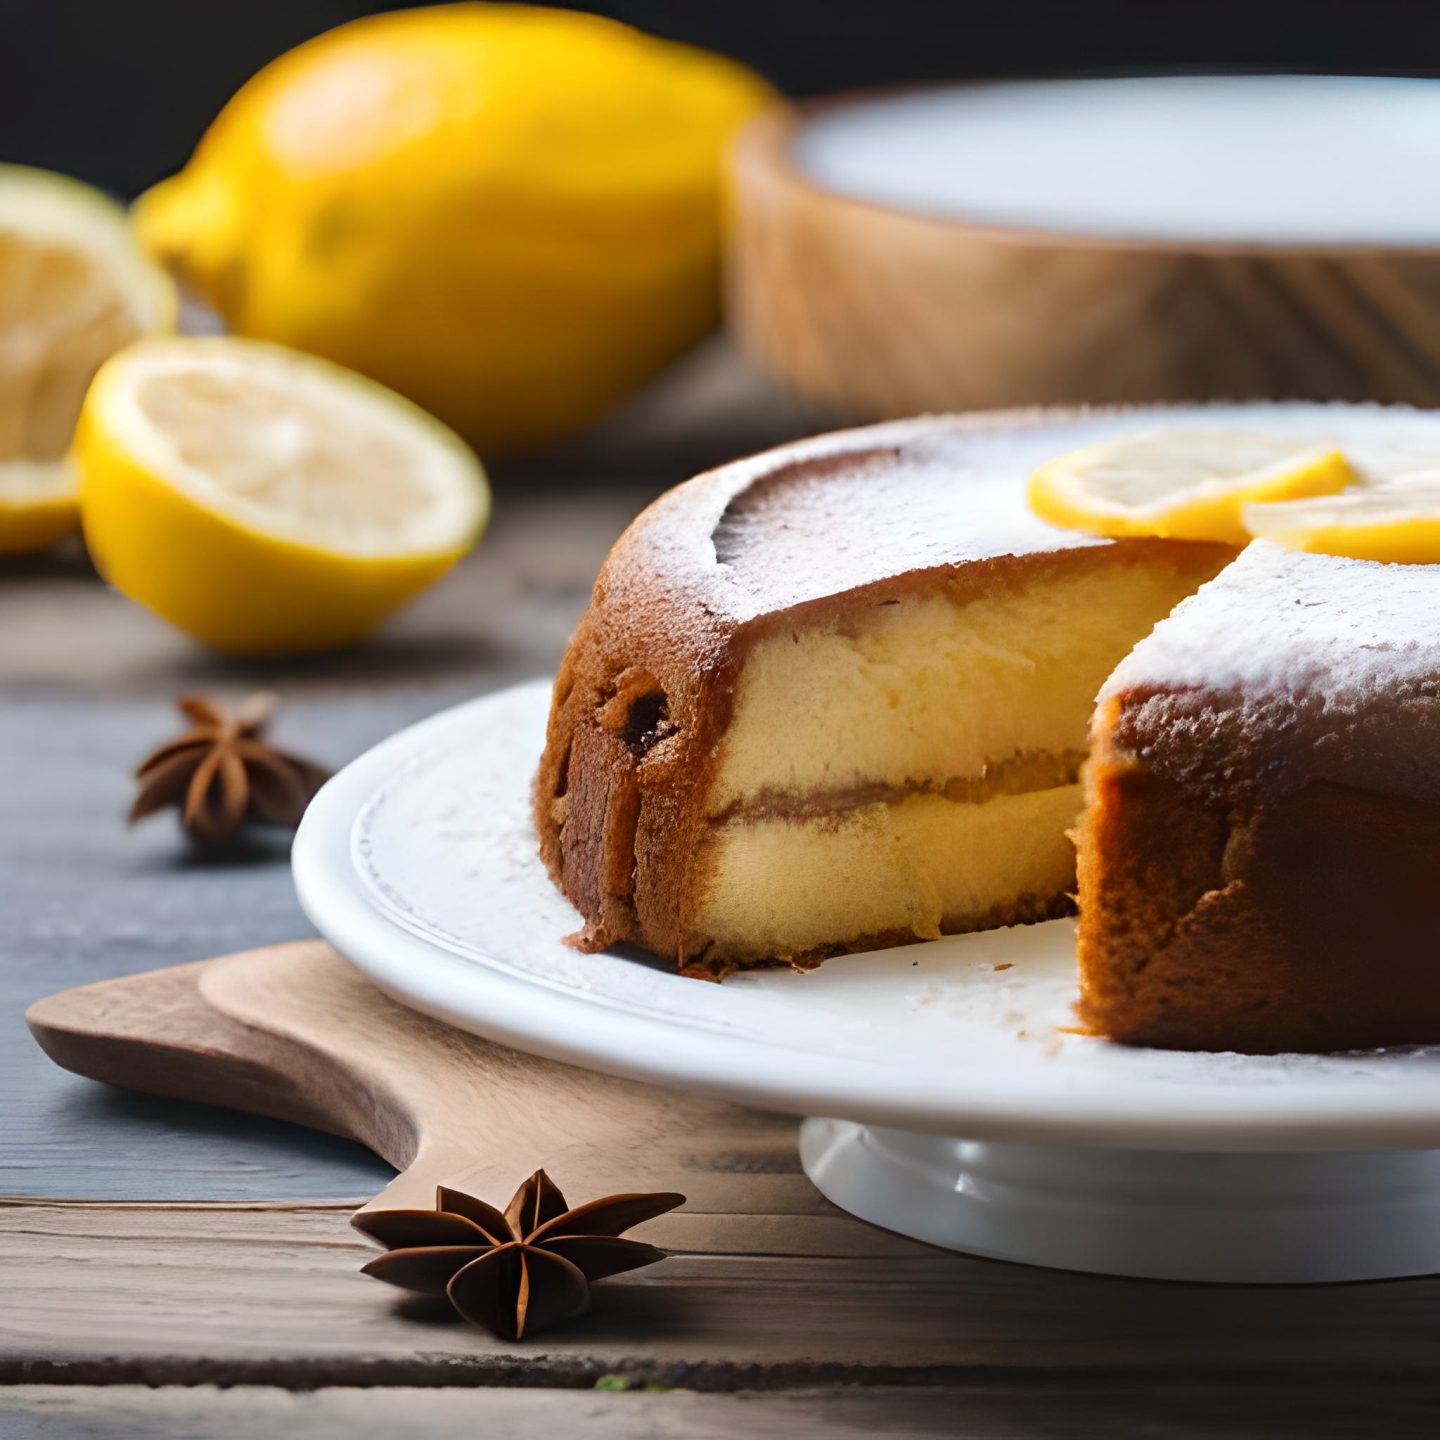 Lemon iced cake, Sweet lemon cake, Lemon syrup cake, Tart lemon cake, Lemon almond cake, Luscious lemon cake, Lemon curd cake, Lemon spice cake.